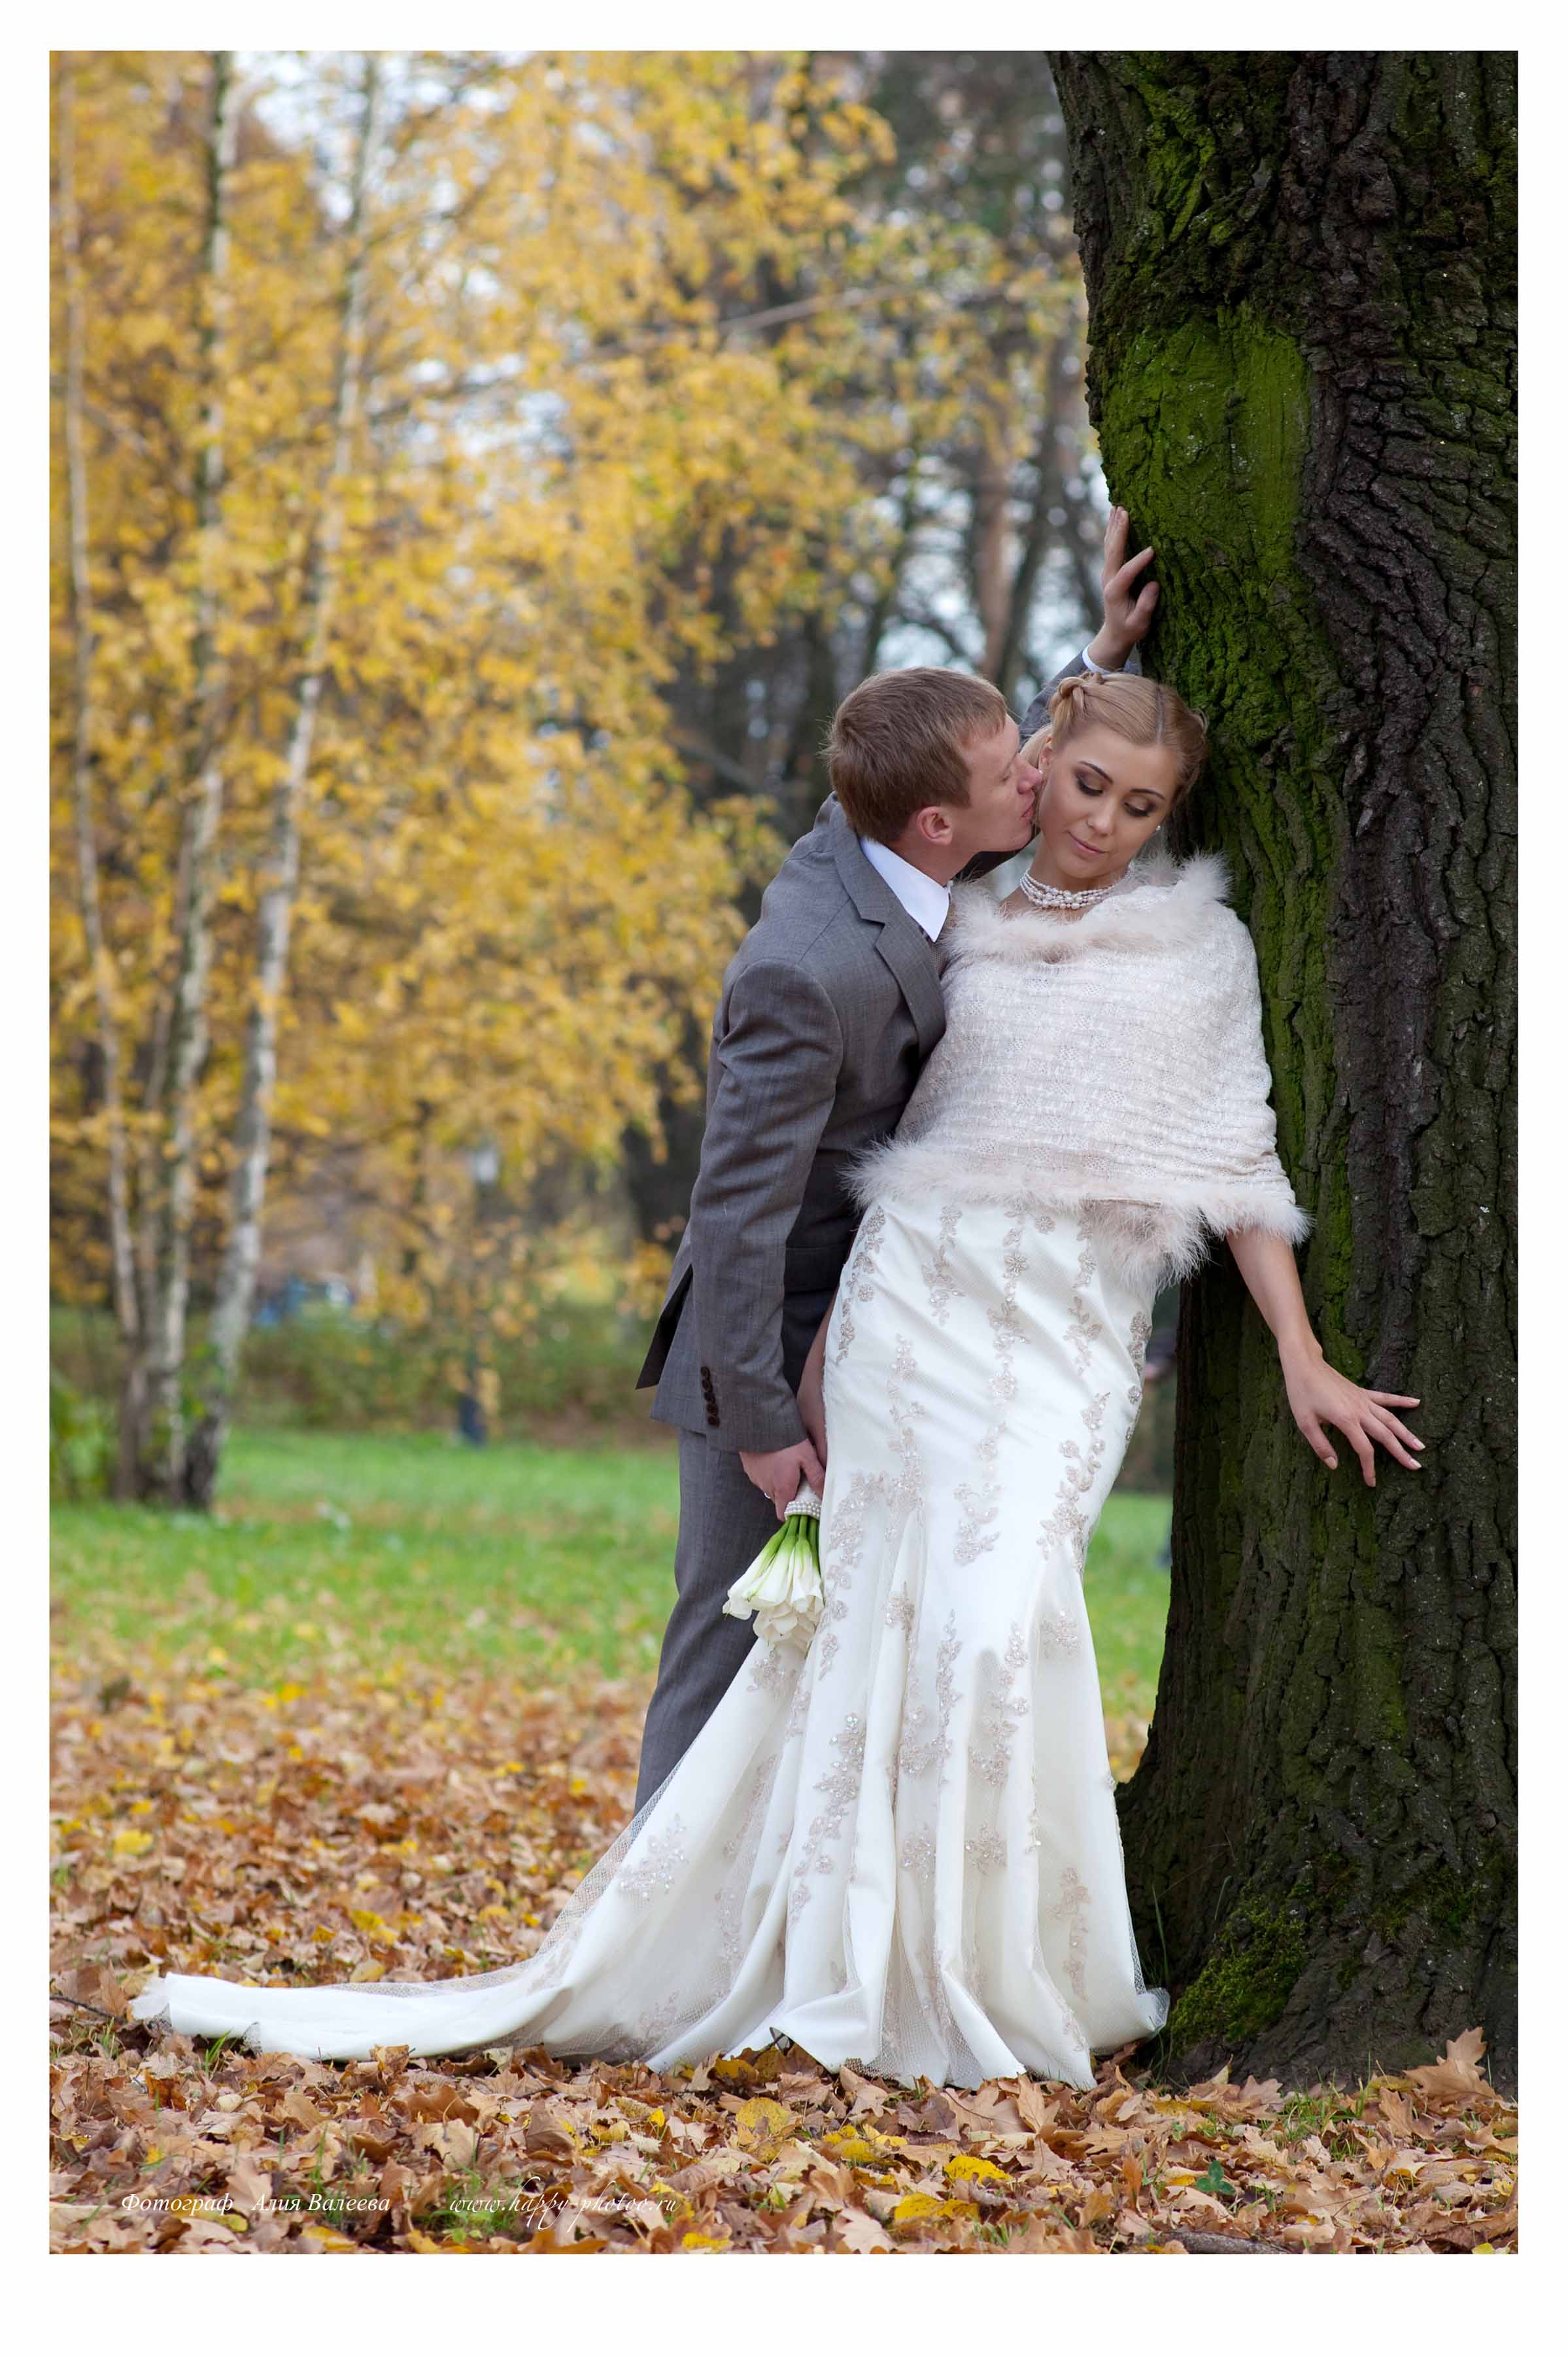 Свадьба осенью фото . Осенняя свадьба фото Фотограф Алия Валеева